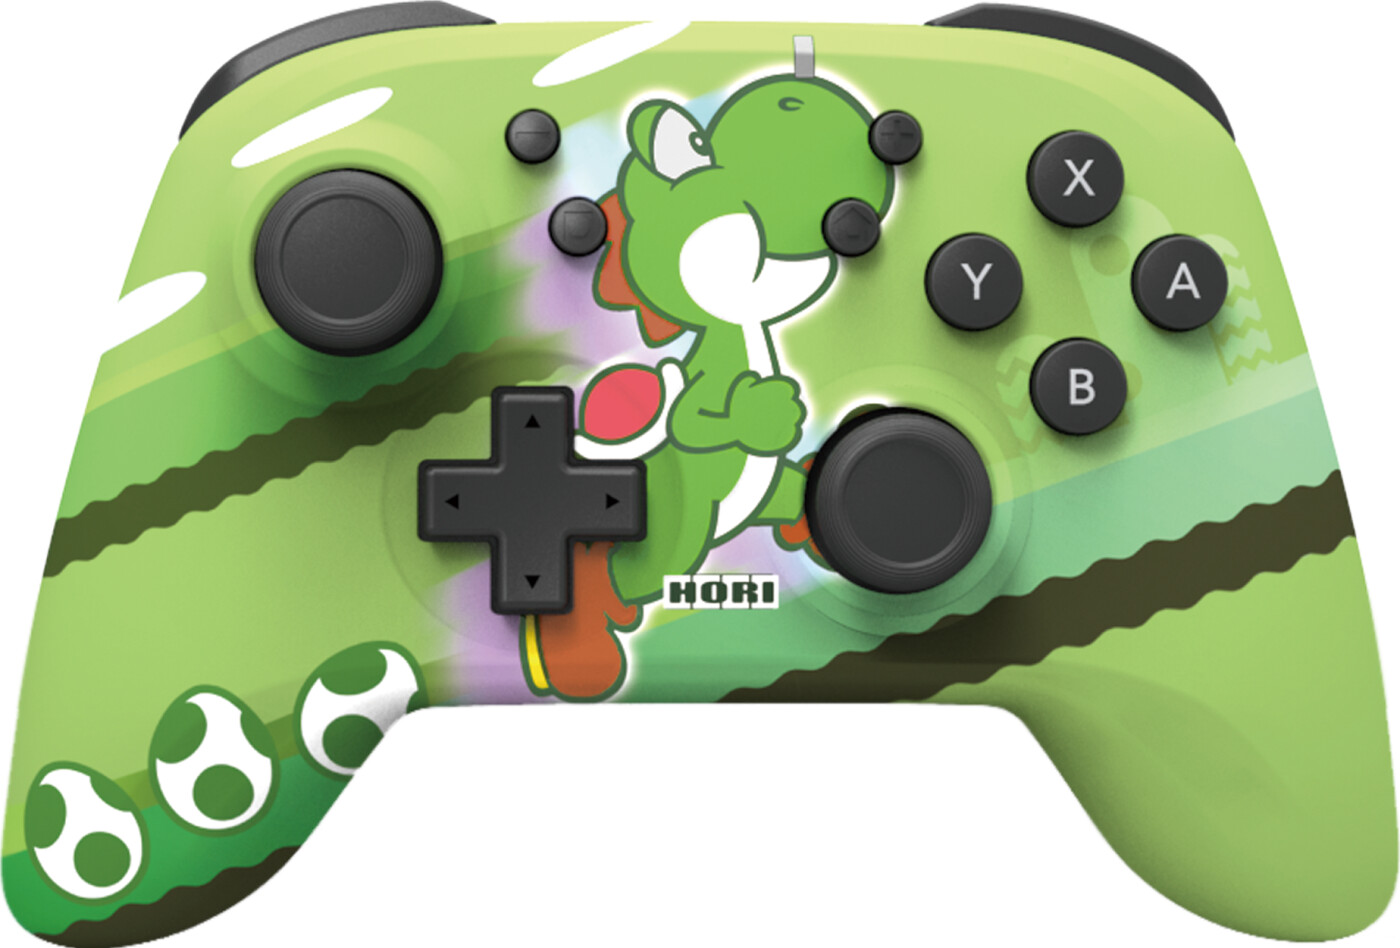 Se Hori - Horipad Trådløs Controller Til Nintendo Switch - Yoshi - Grøn Sort hos Gucca.dk